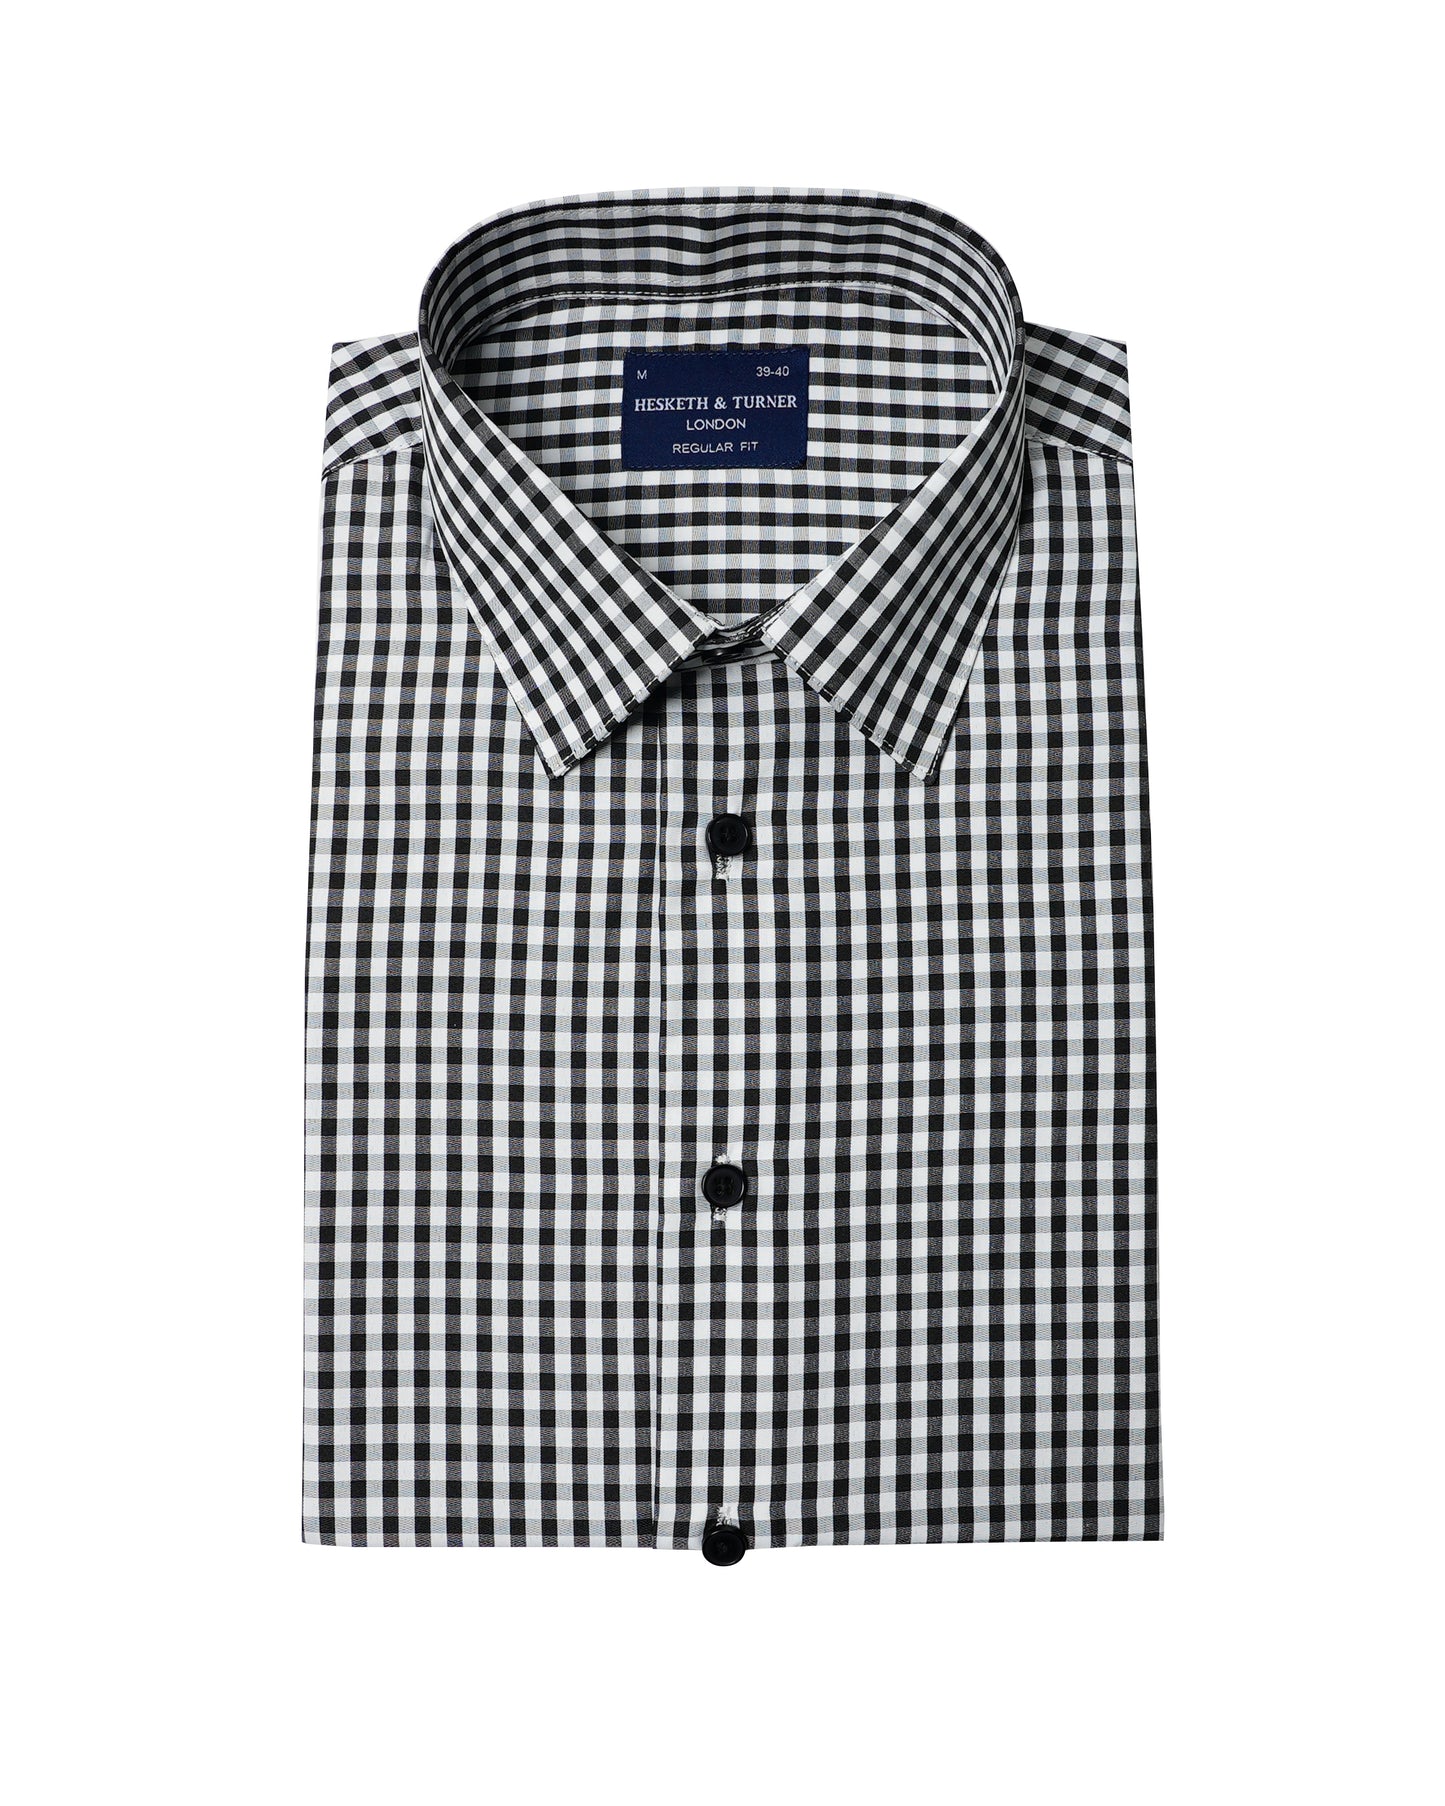 Black, White and Grey Regular Fit Short Sleeve Shirt (2281)